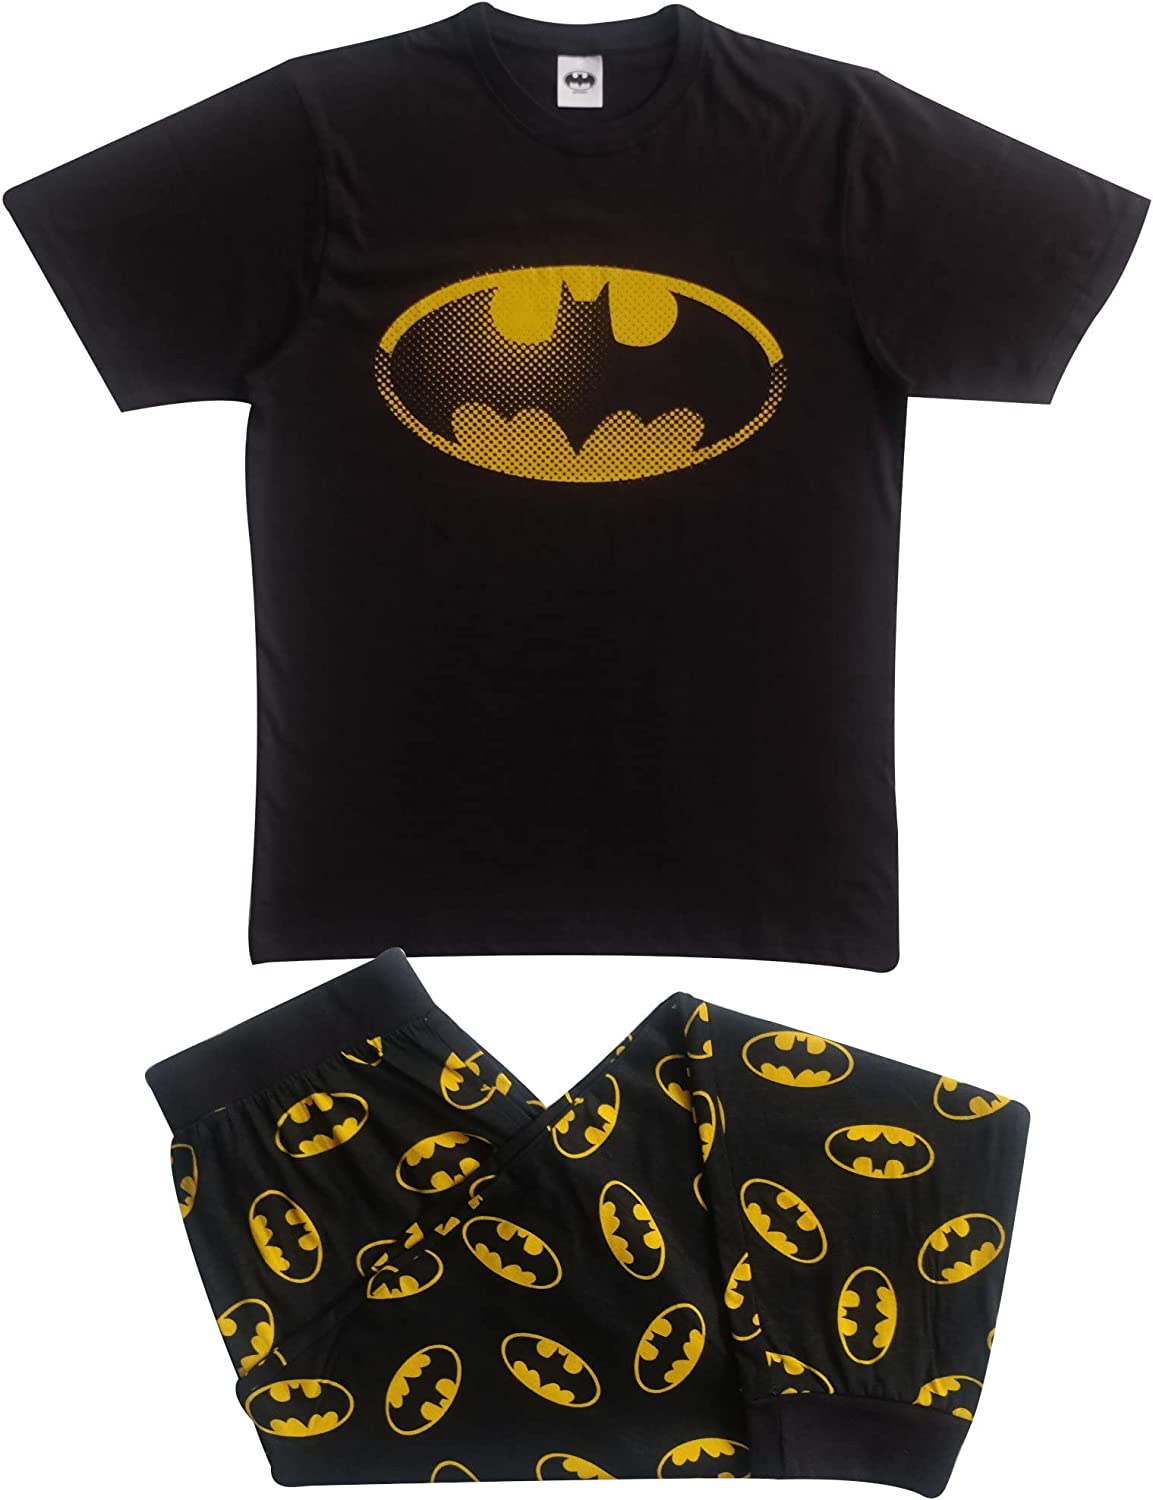 Batman Classic Symbol Pajama Shirt and Sleep Pant Box Set